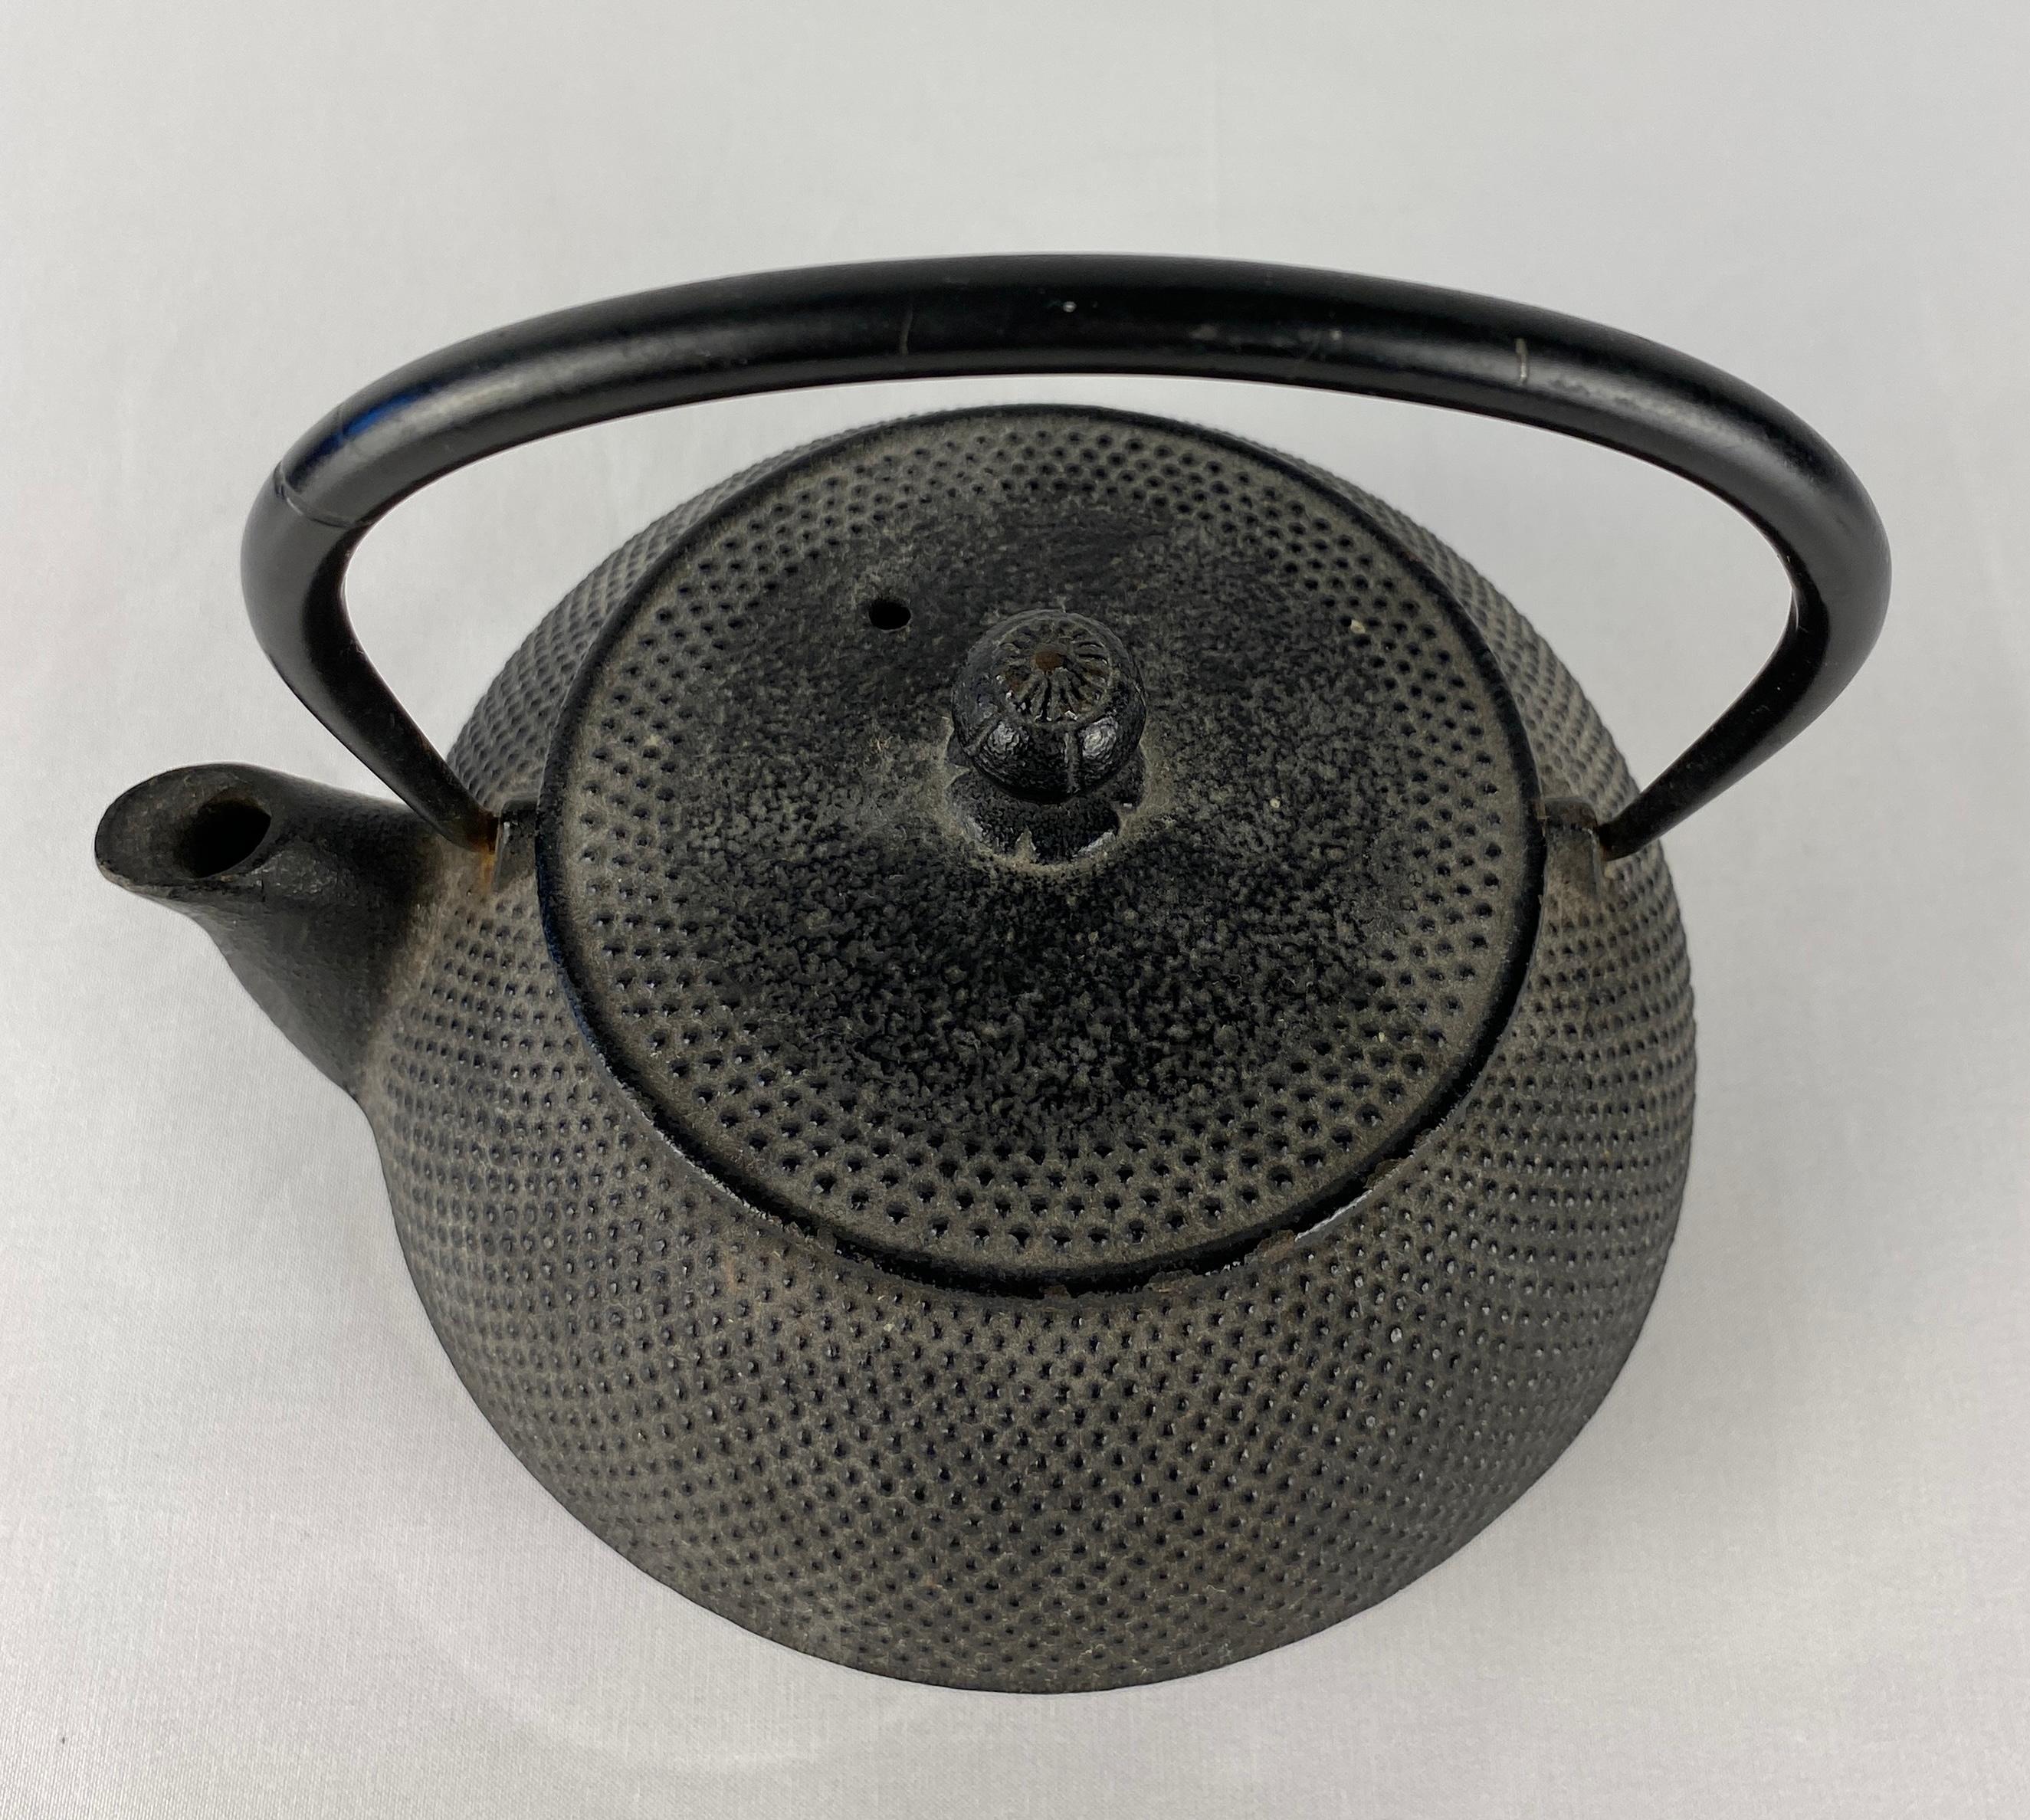 Antique Japanese Cast Iron Tea Pot or Tetsubin In Good Condition For Sale In Miami, FL